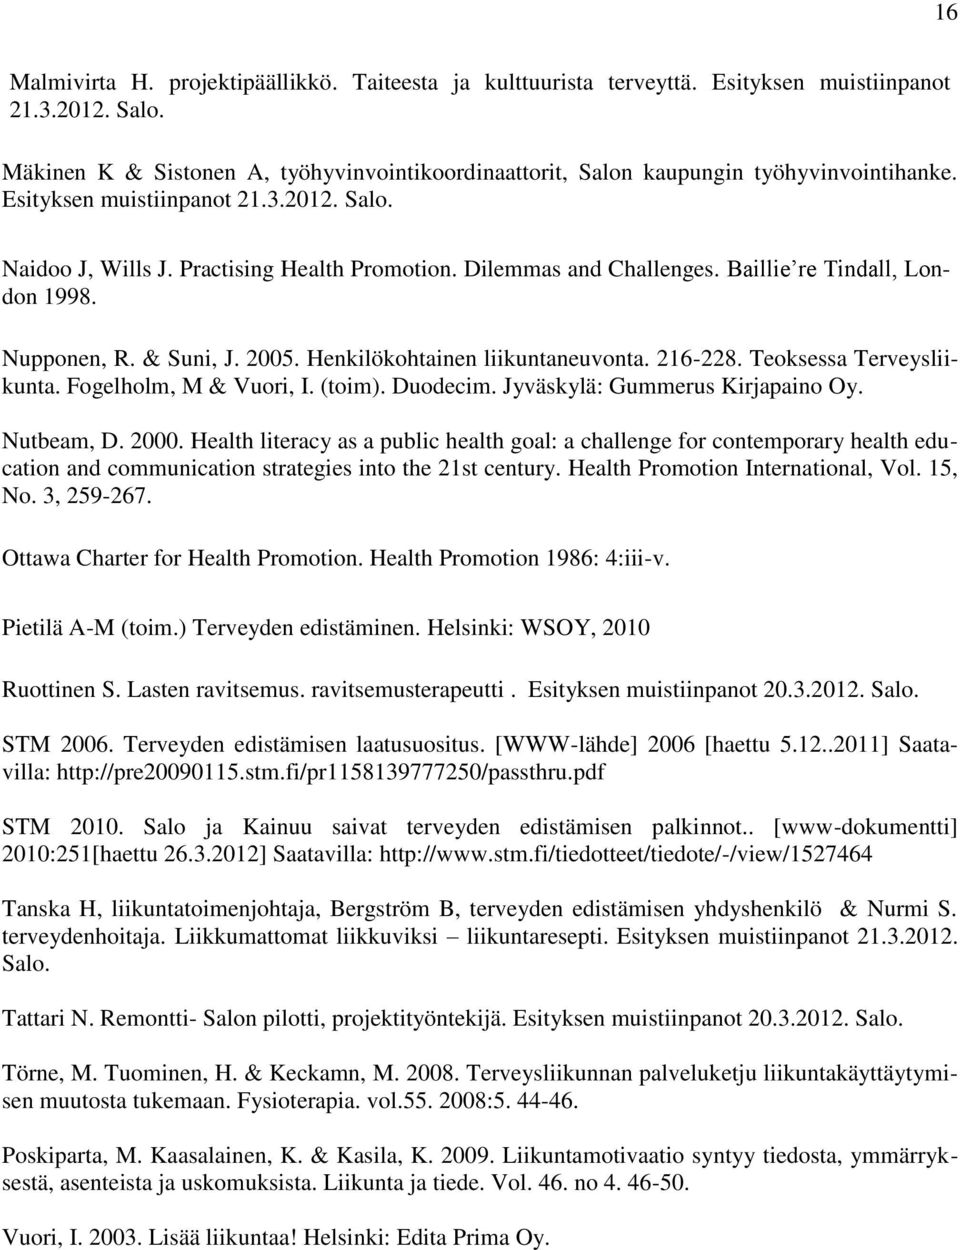 Dilemmas and Challenges. Baillie re Tindall, London 1998. Nupponen, R. & Suni, J. 2005. Henkilökohtainen liikuntaneuvonta. 216-228. Teoksessa Terveysliikunta. Fogelholm, M & Vuori, I. (toim).